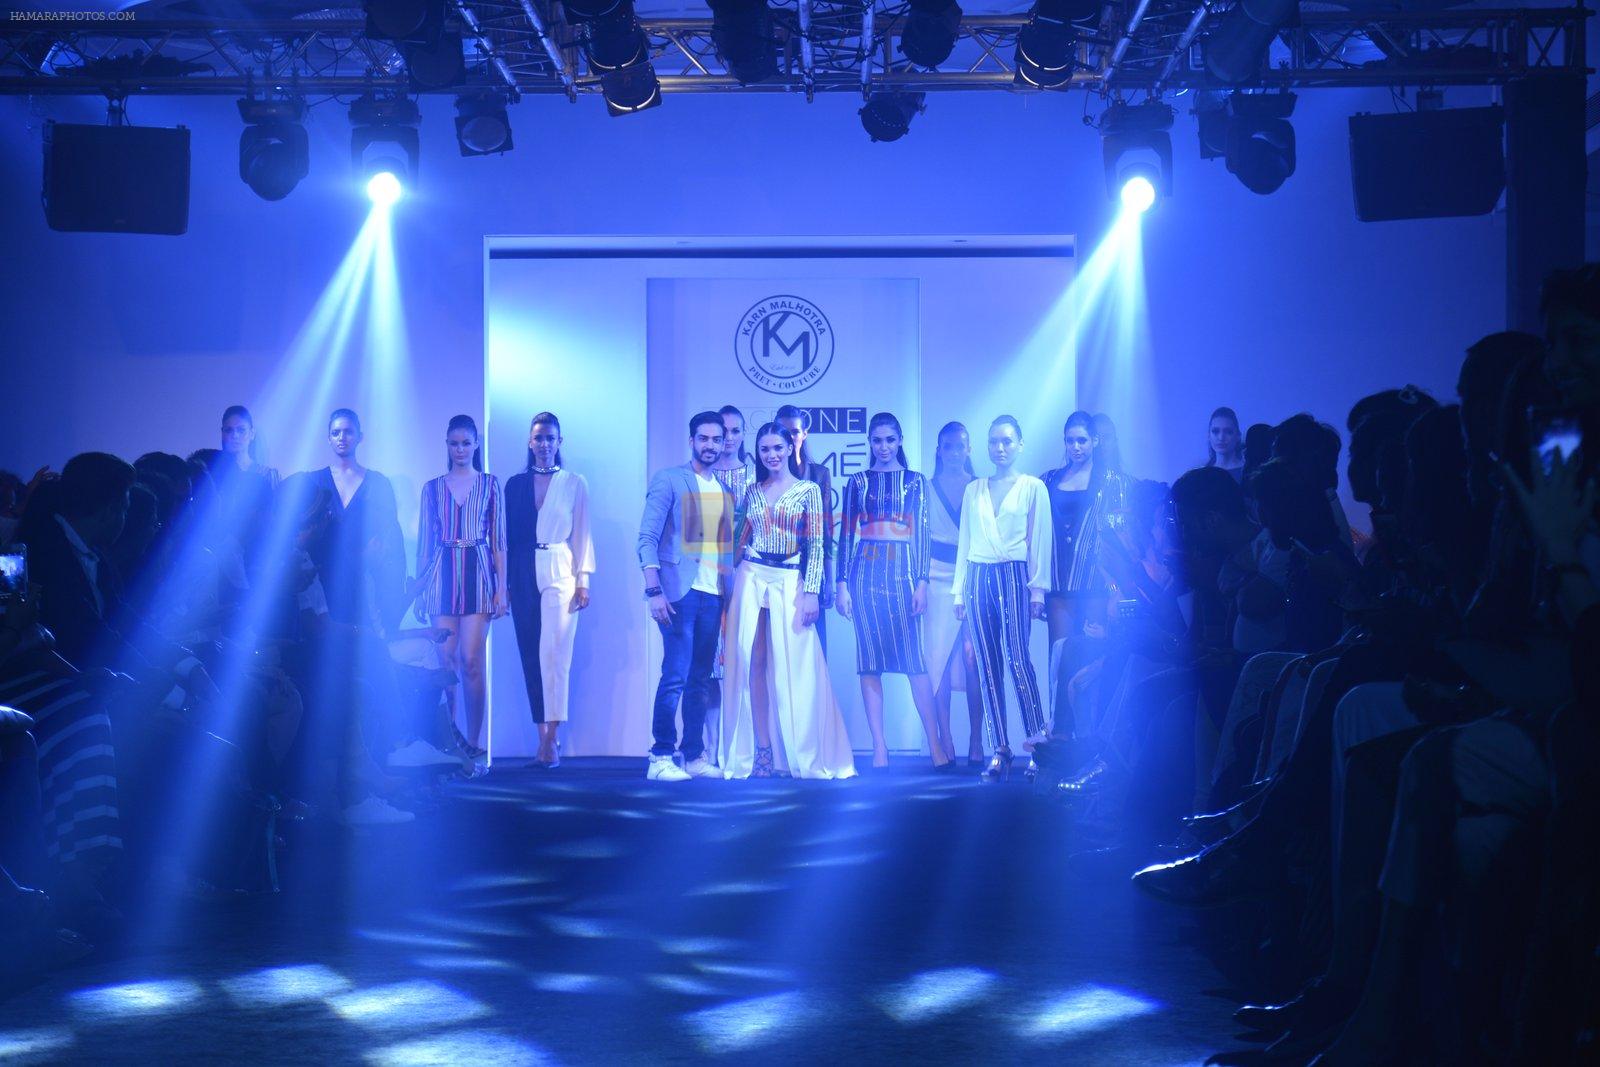 Amy Jackson at the Karan Malhotra Show at Lakme Fashion Week on 3rd April 2016